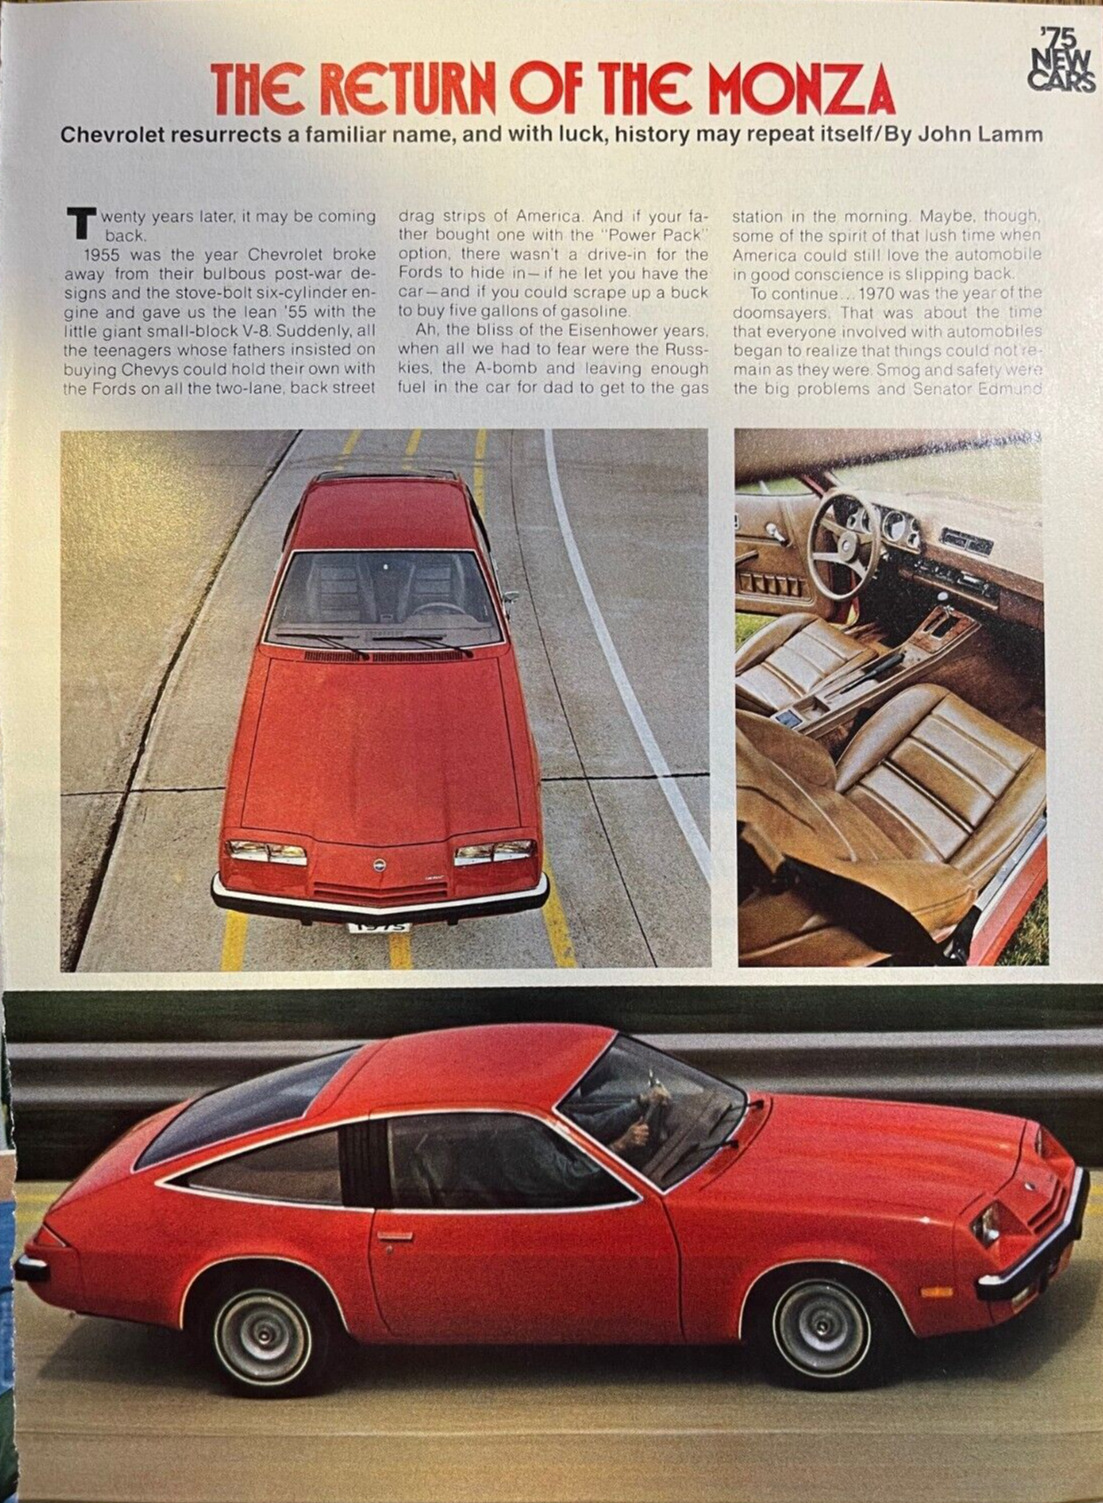 1975 Chevrolet Monza illustrated